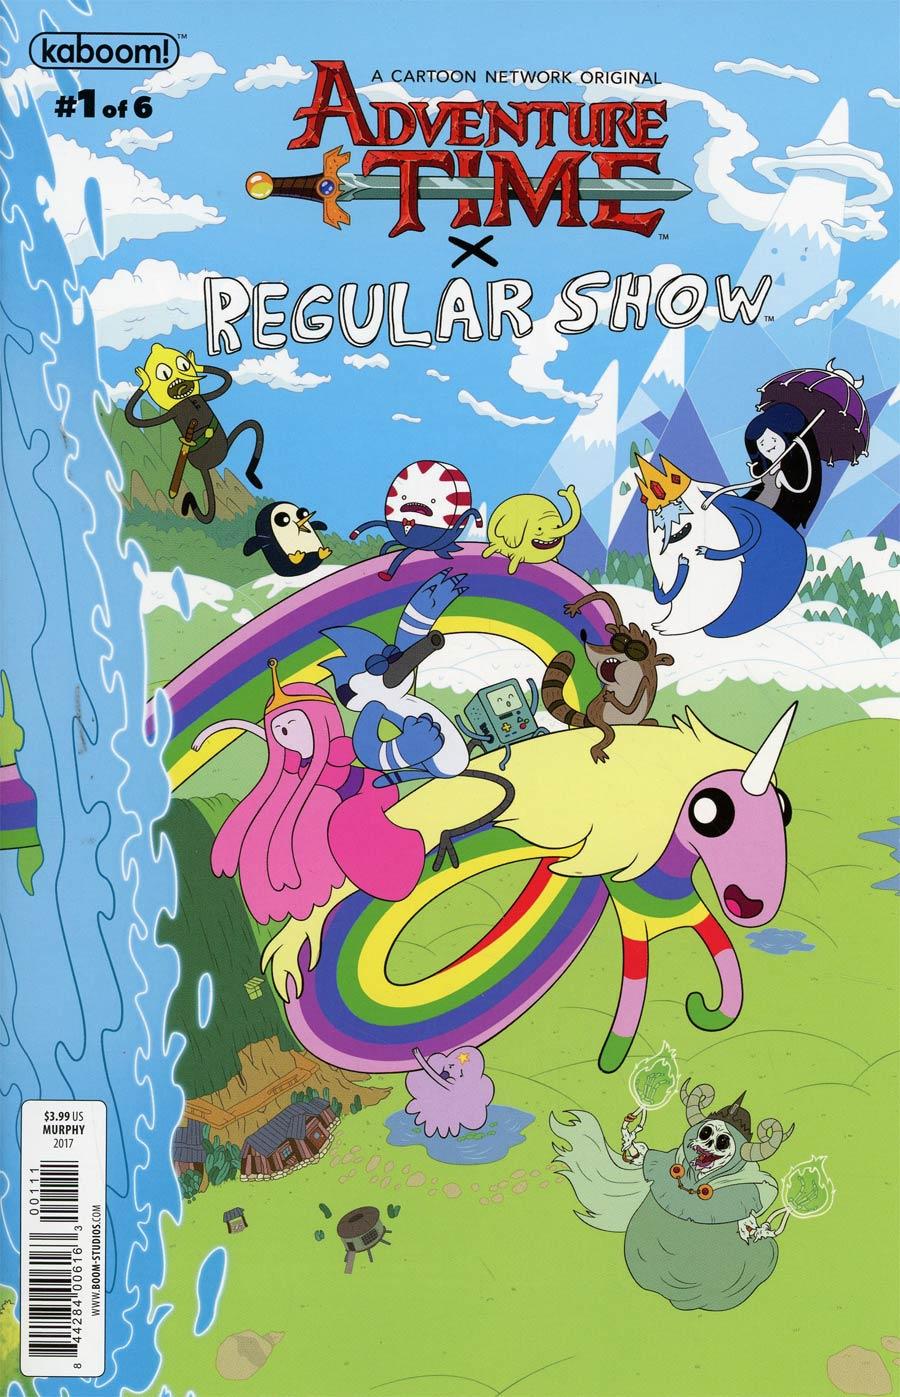 Adventure Time Regular Show Vol. 1 #1